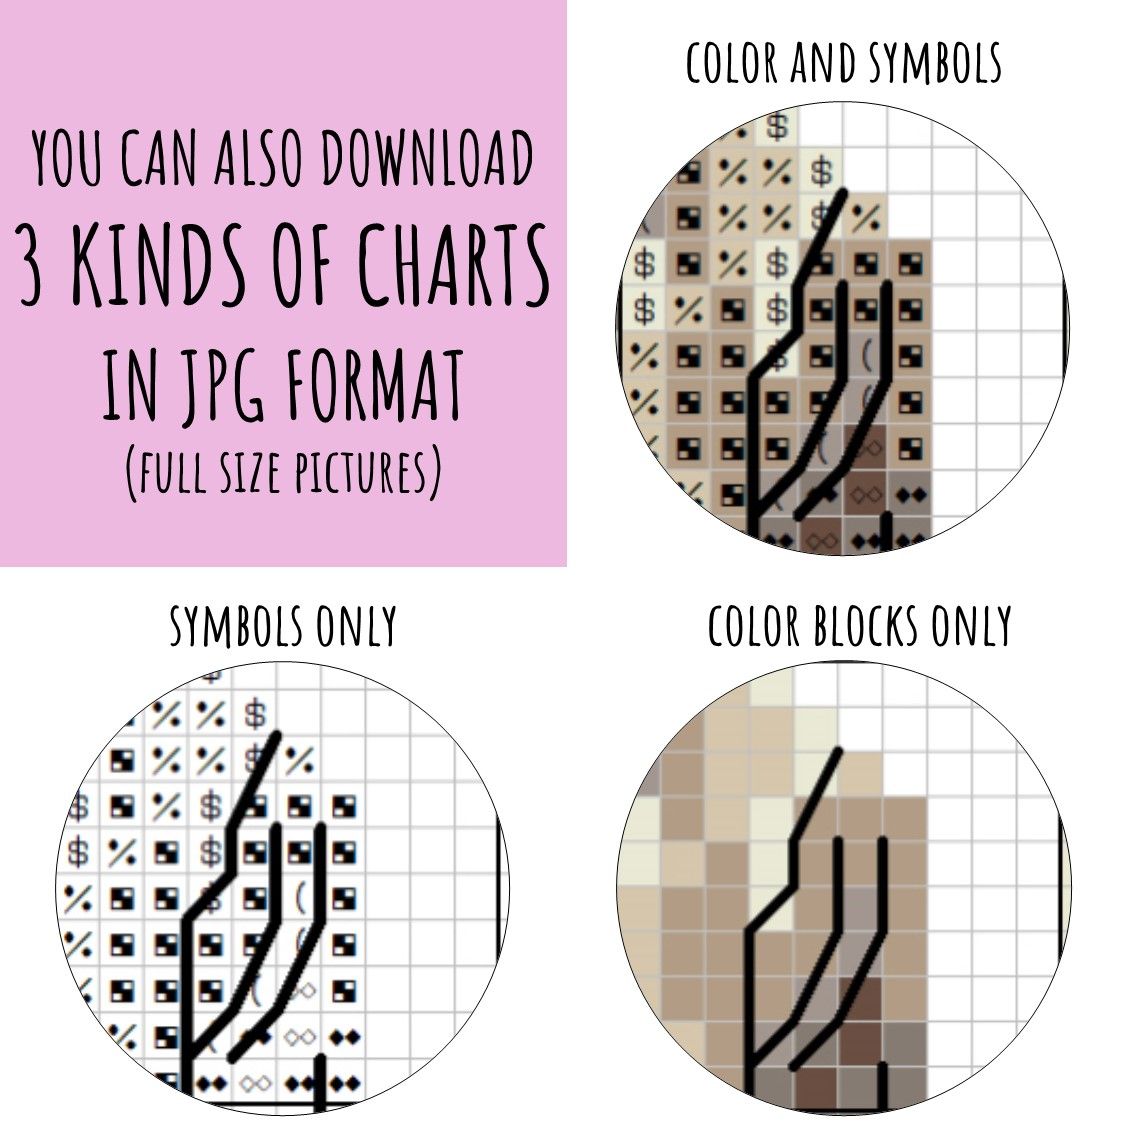 Dog Cross Stitch Bookmark Pattern PDF, plastic canvas pattern & tutorial